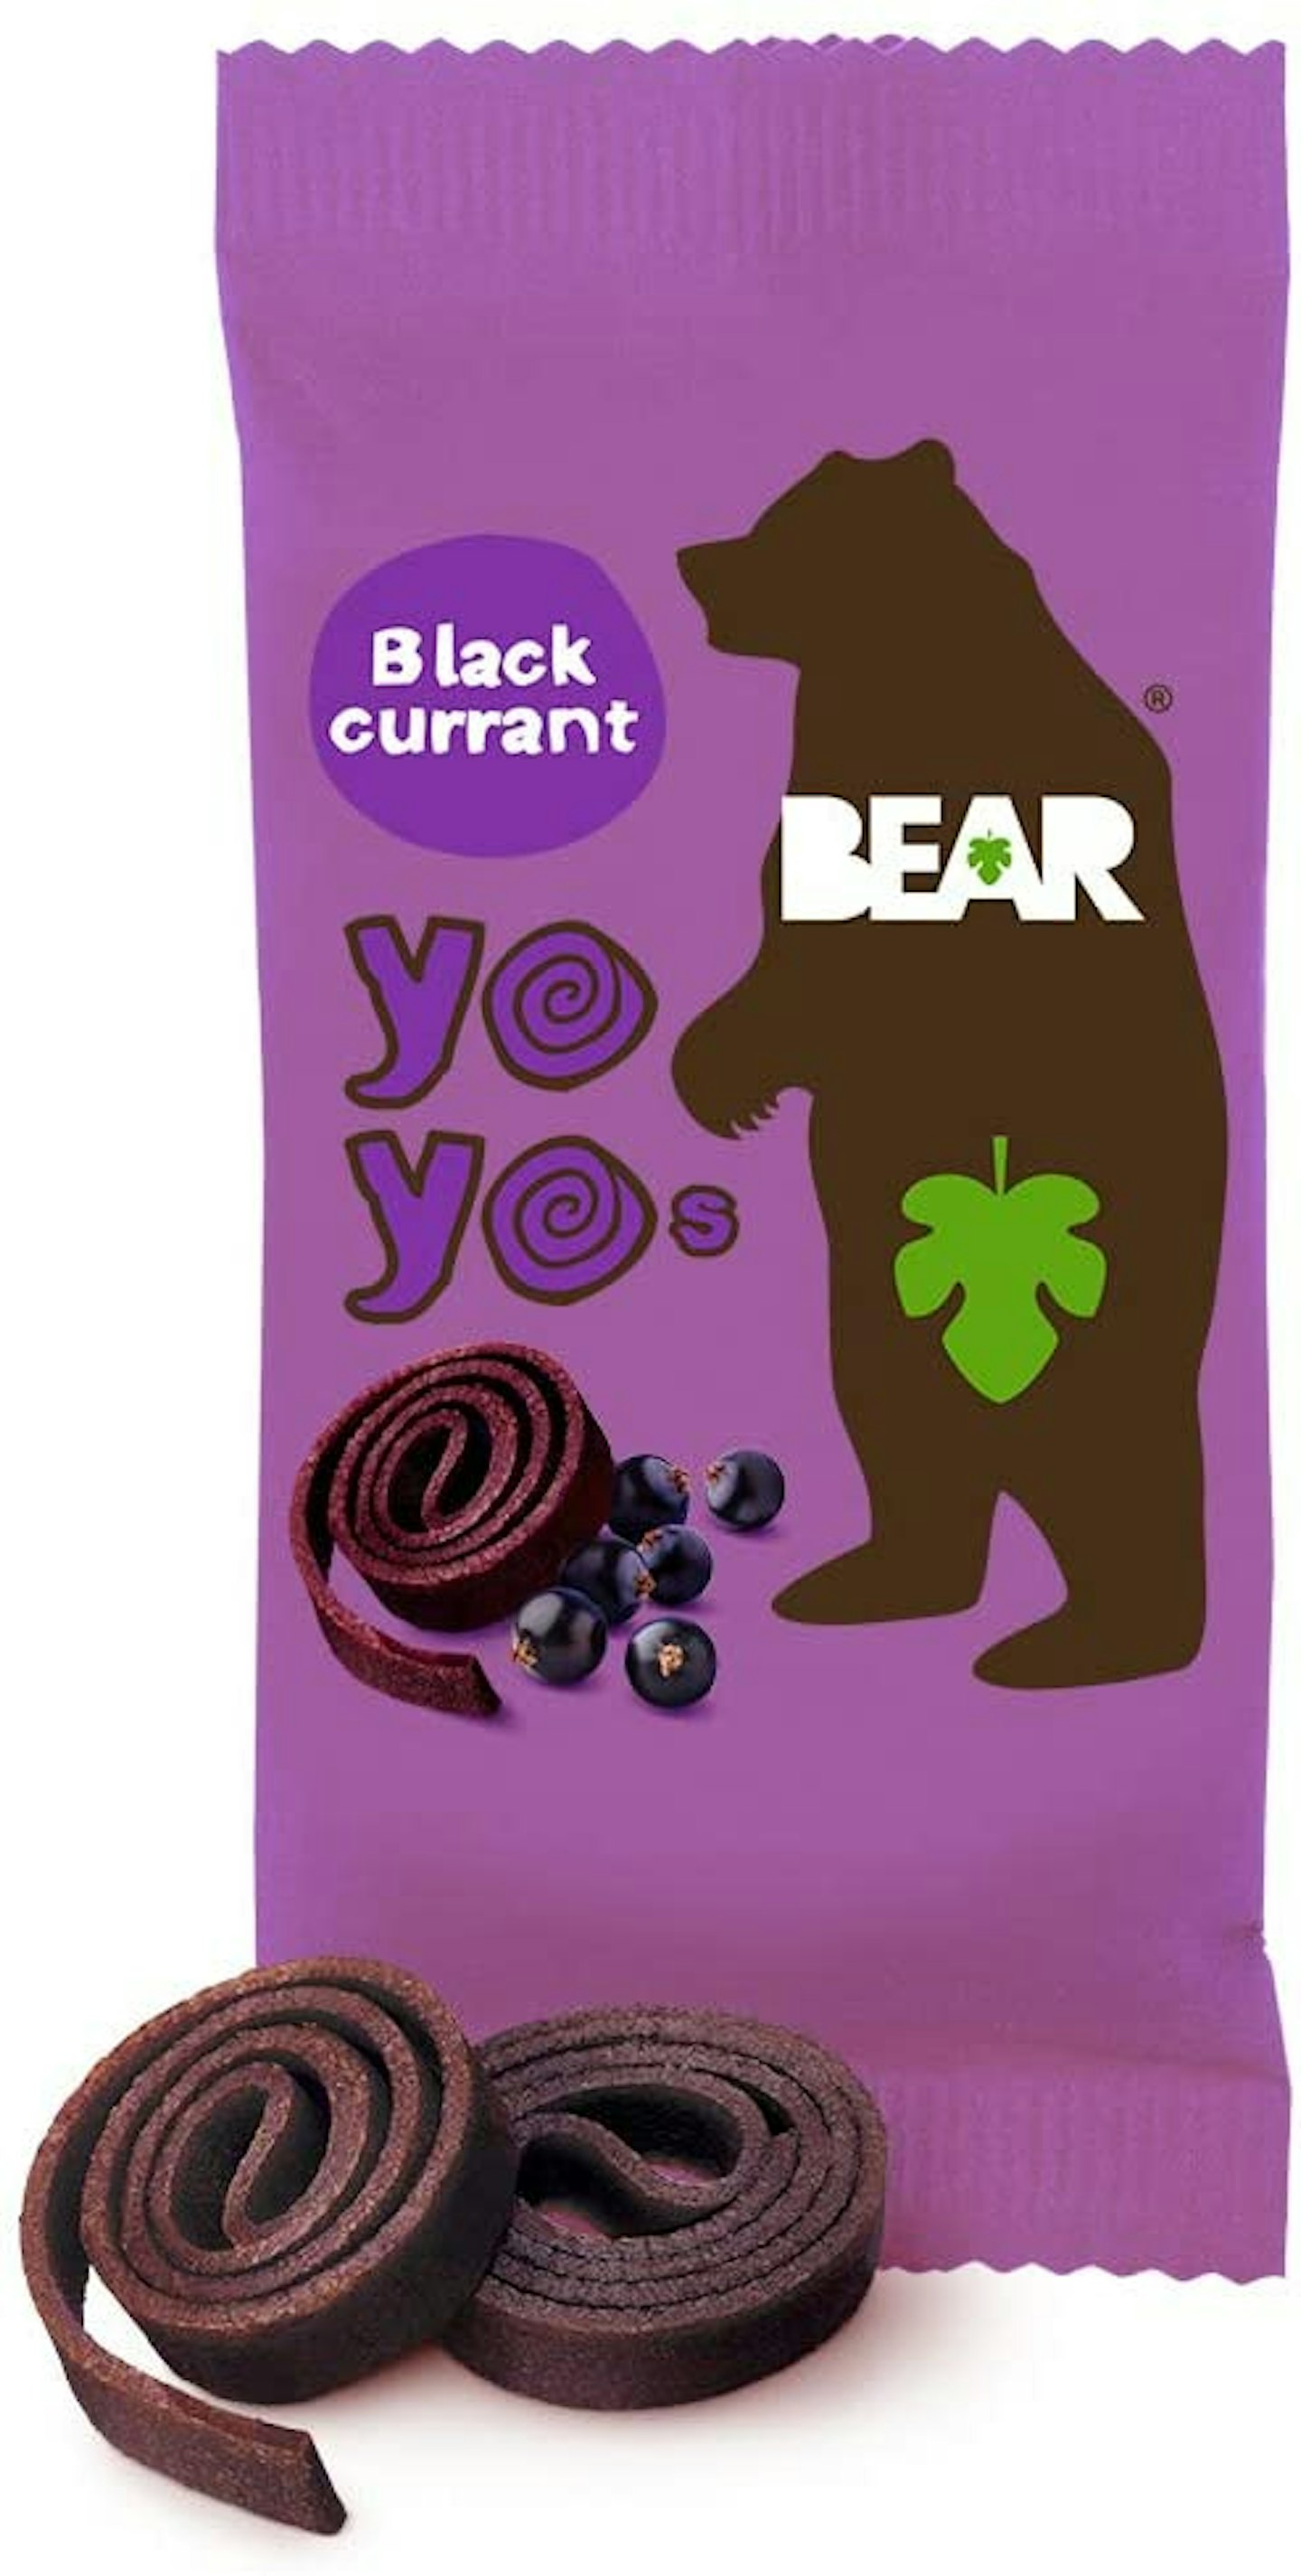 BEAR Blackcurrant YoYo Fruit Roll (Pack of 18)